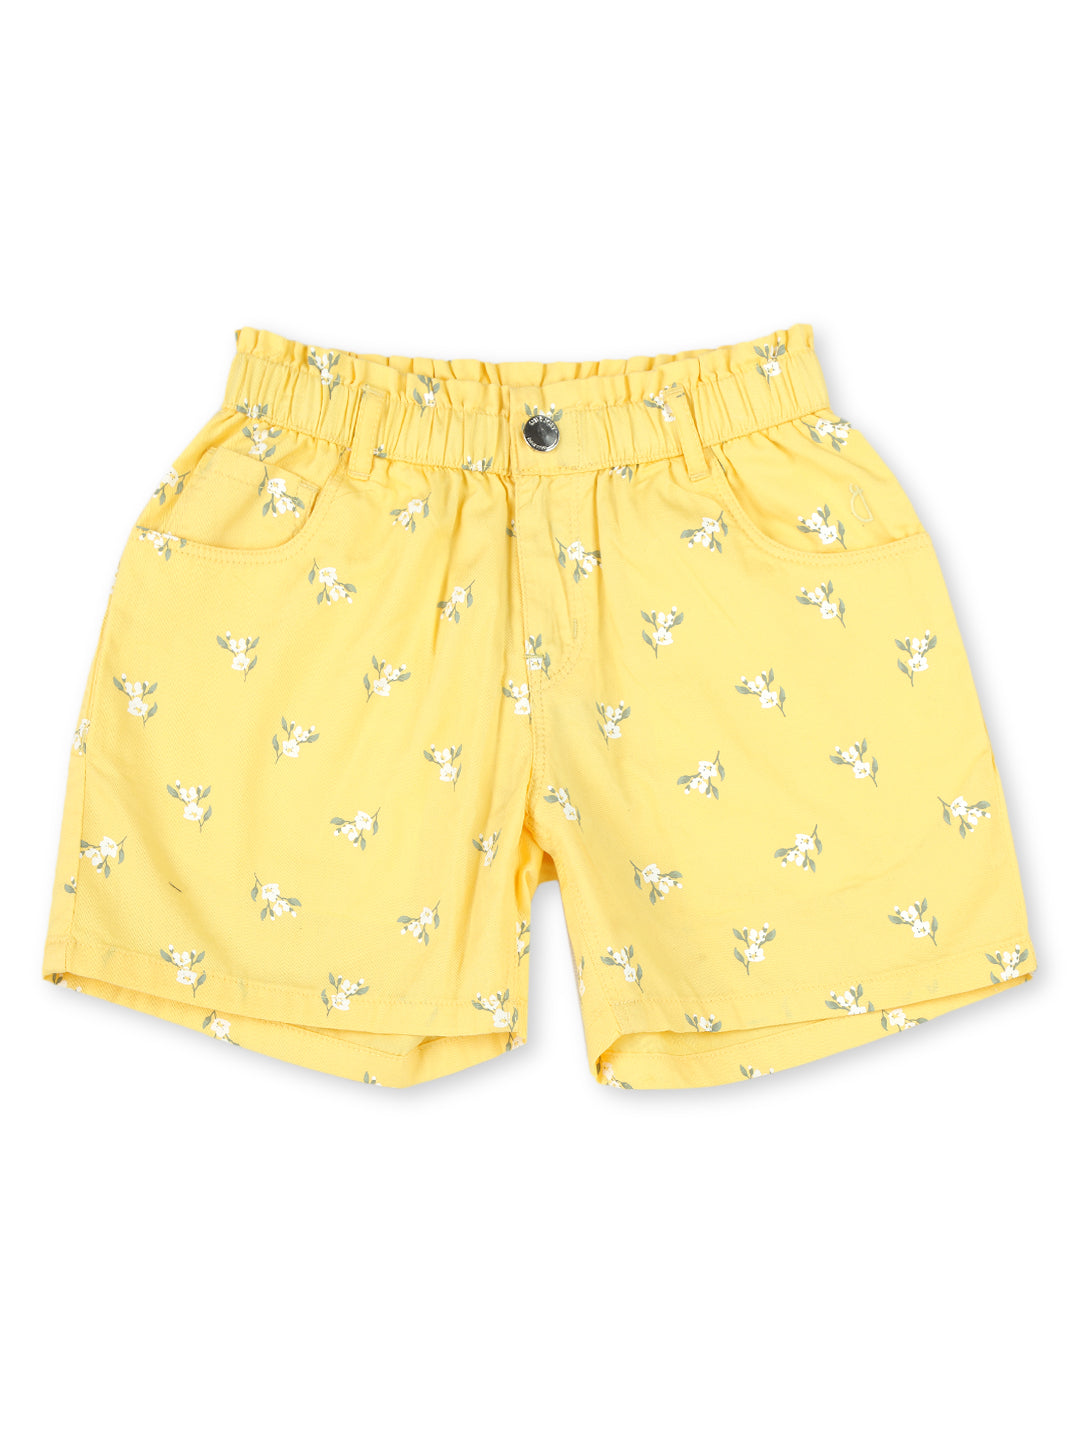 Girls Yellow Cotton Printed Shorts